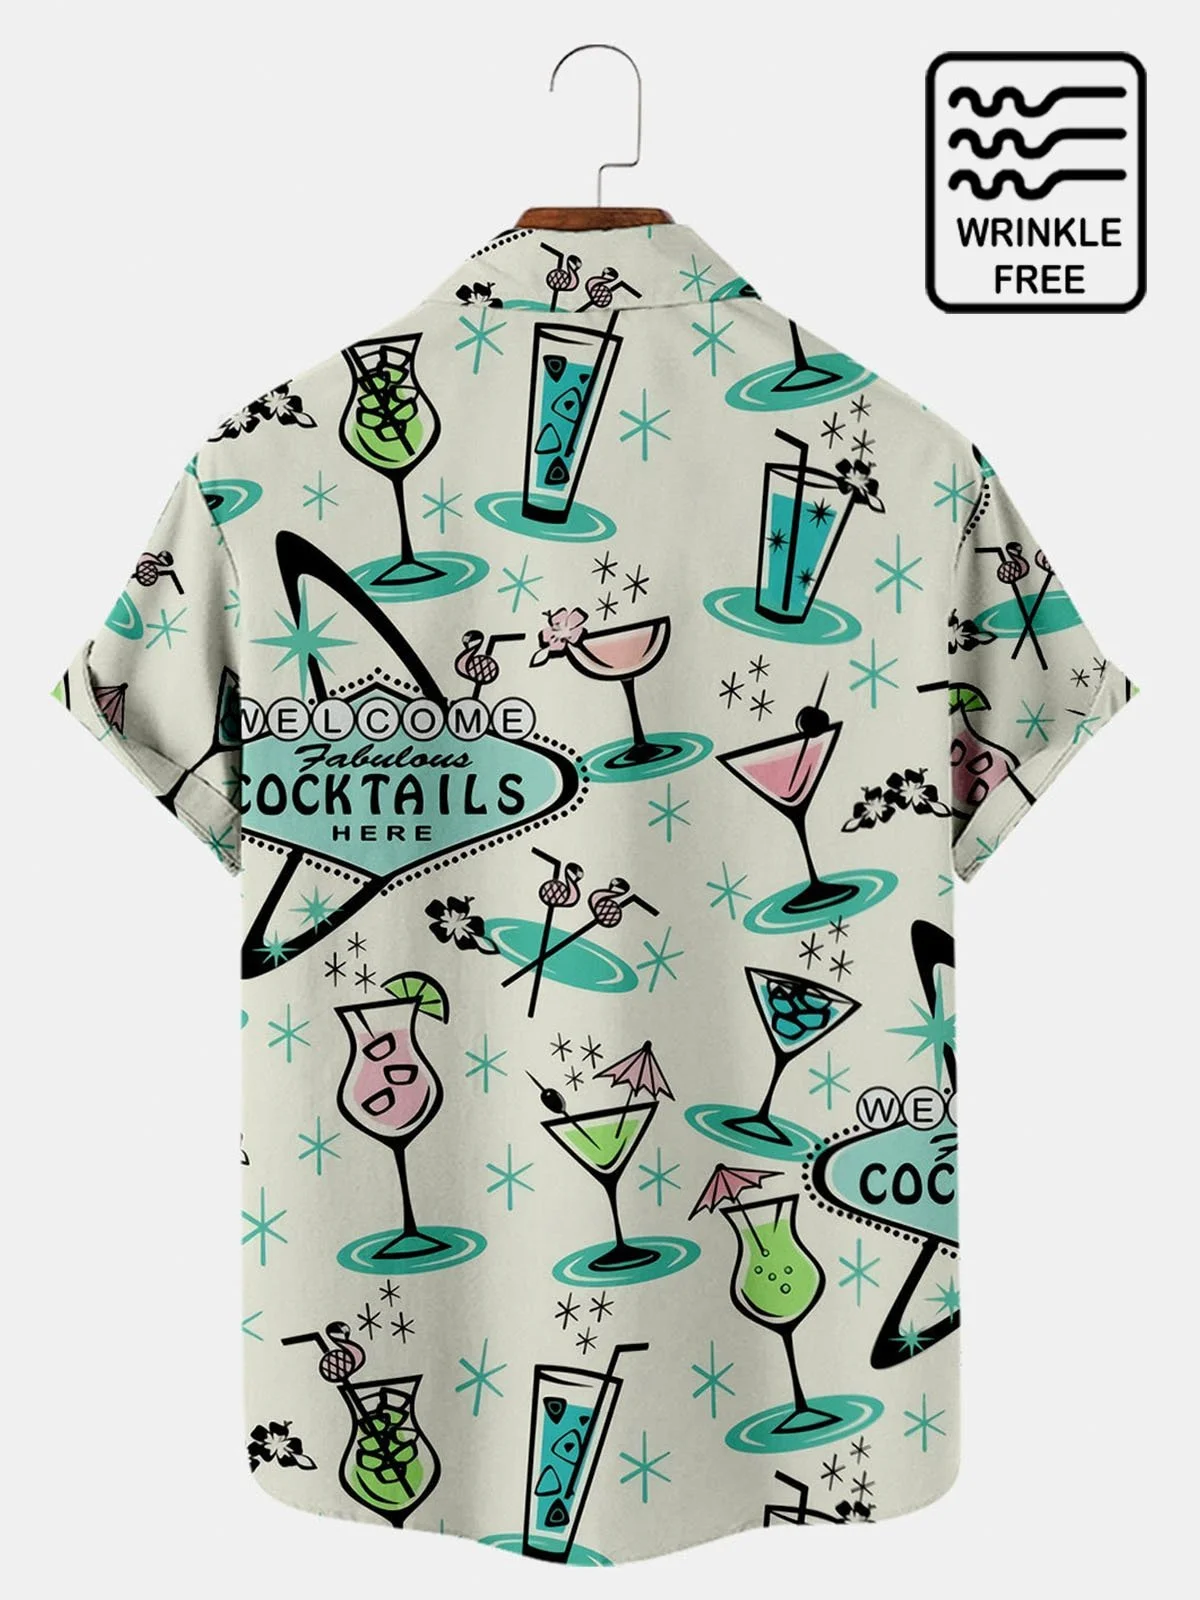 Men's Fashion Vintage Wrinkle Free Casual Shirts Geometric Cocktail Seersucker Tops